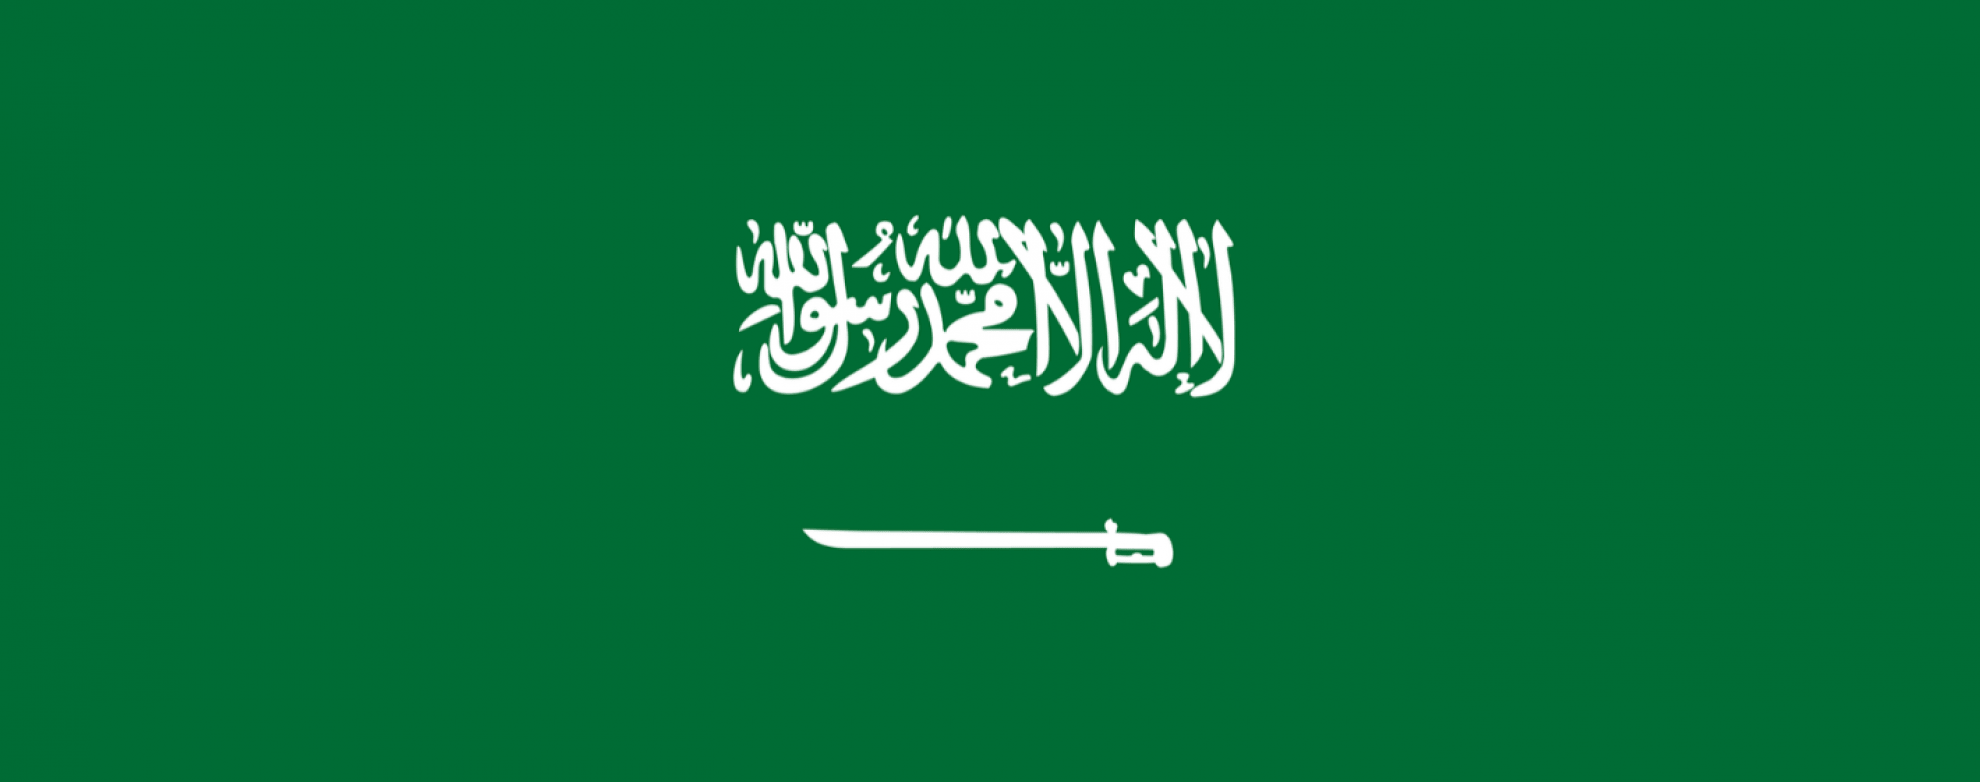 New Taxation Measures in Saudi Arabia